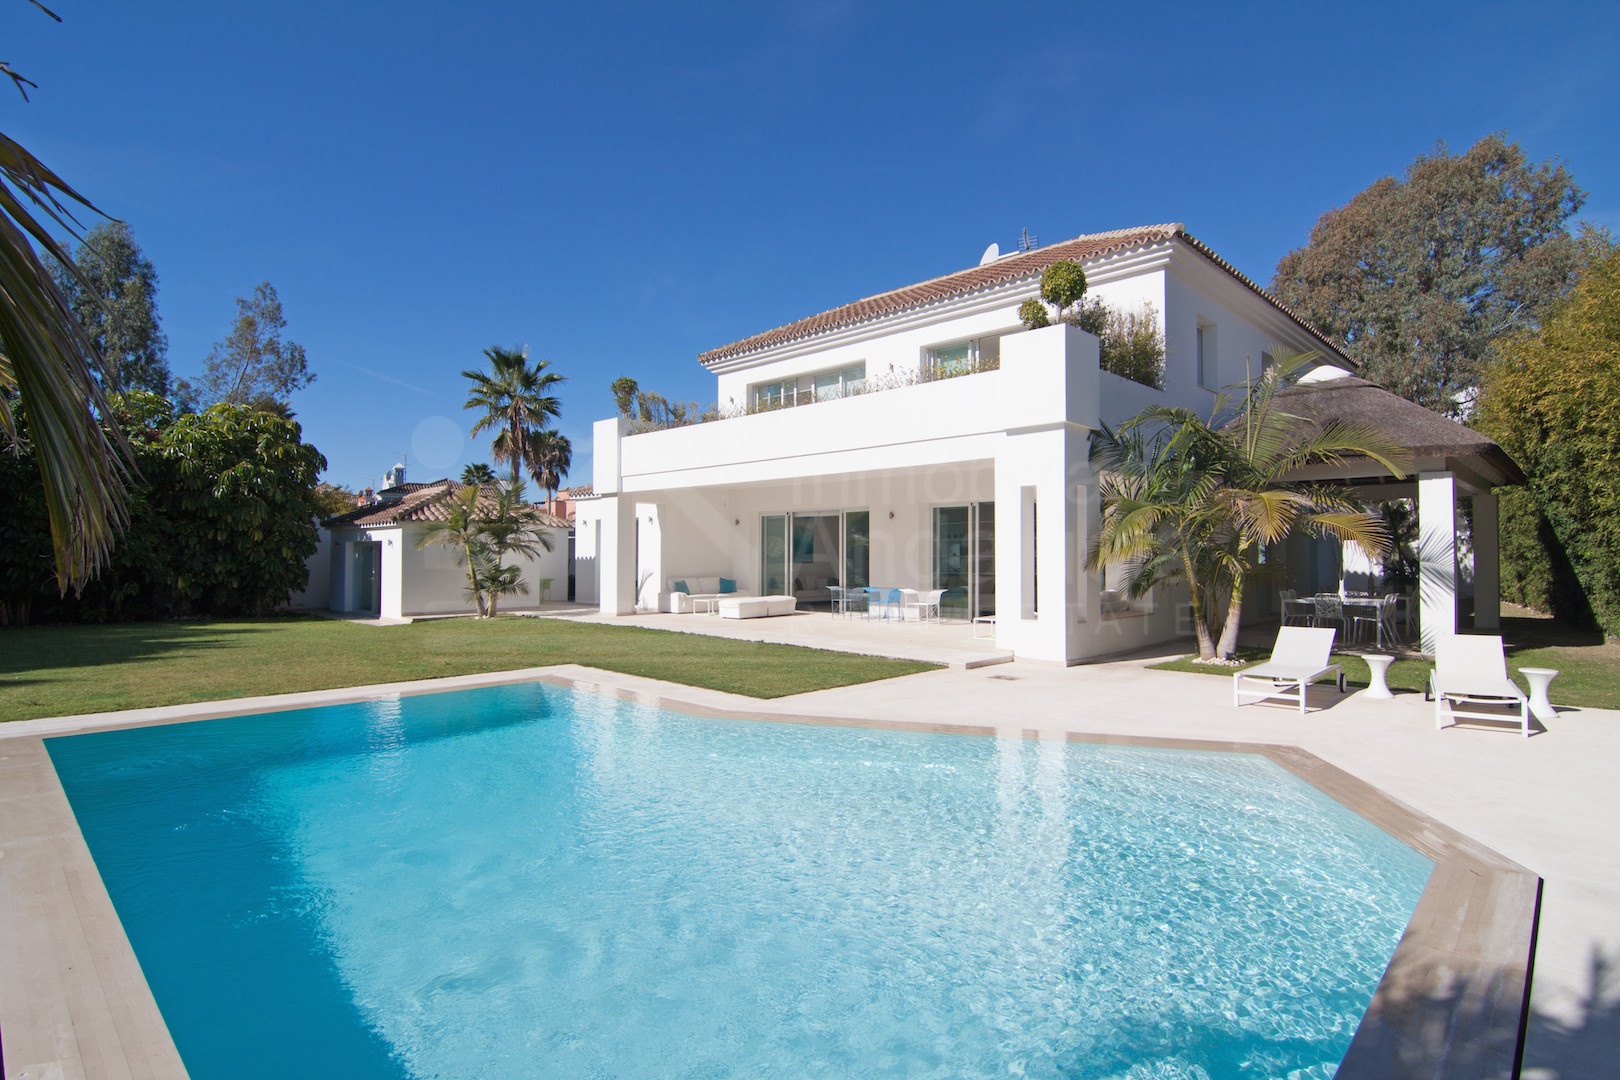 5 bedroom villa renovated to high modern standard for sale in Casasola Estepona